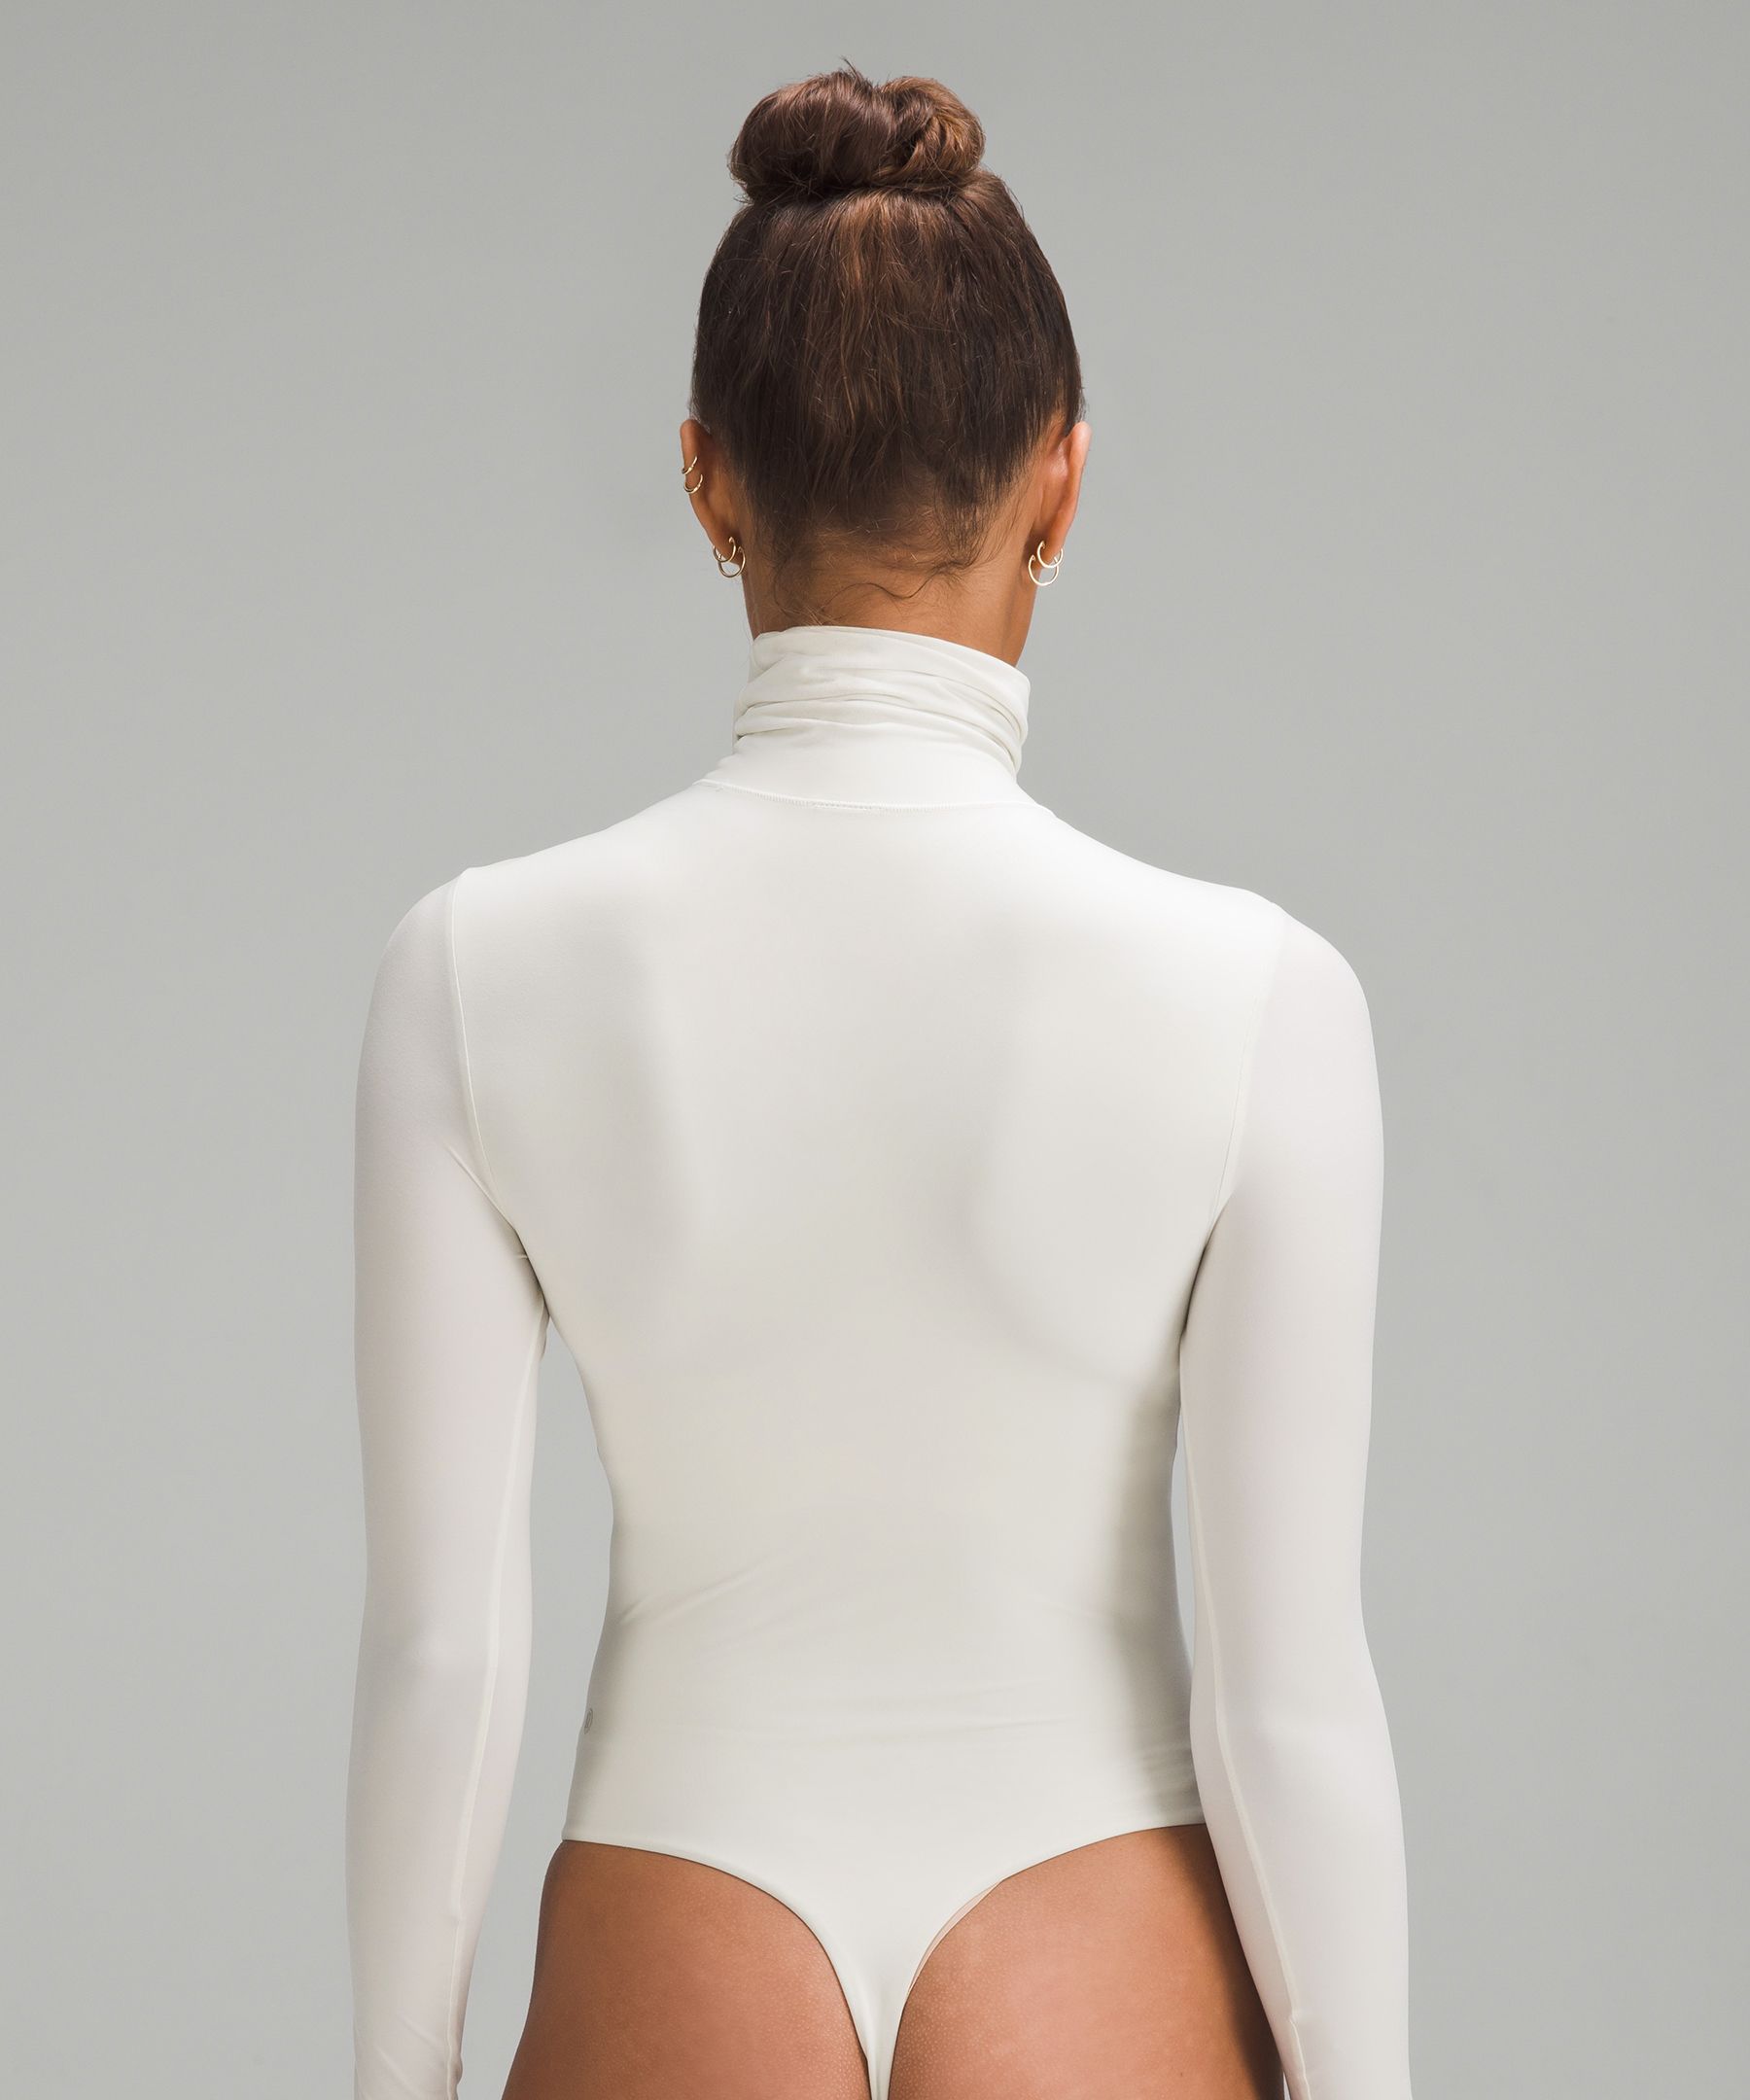 Mobeadon Long Sleeve Bodysuit for Women Turtleneck Stretchy Basic